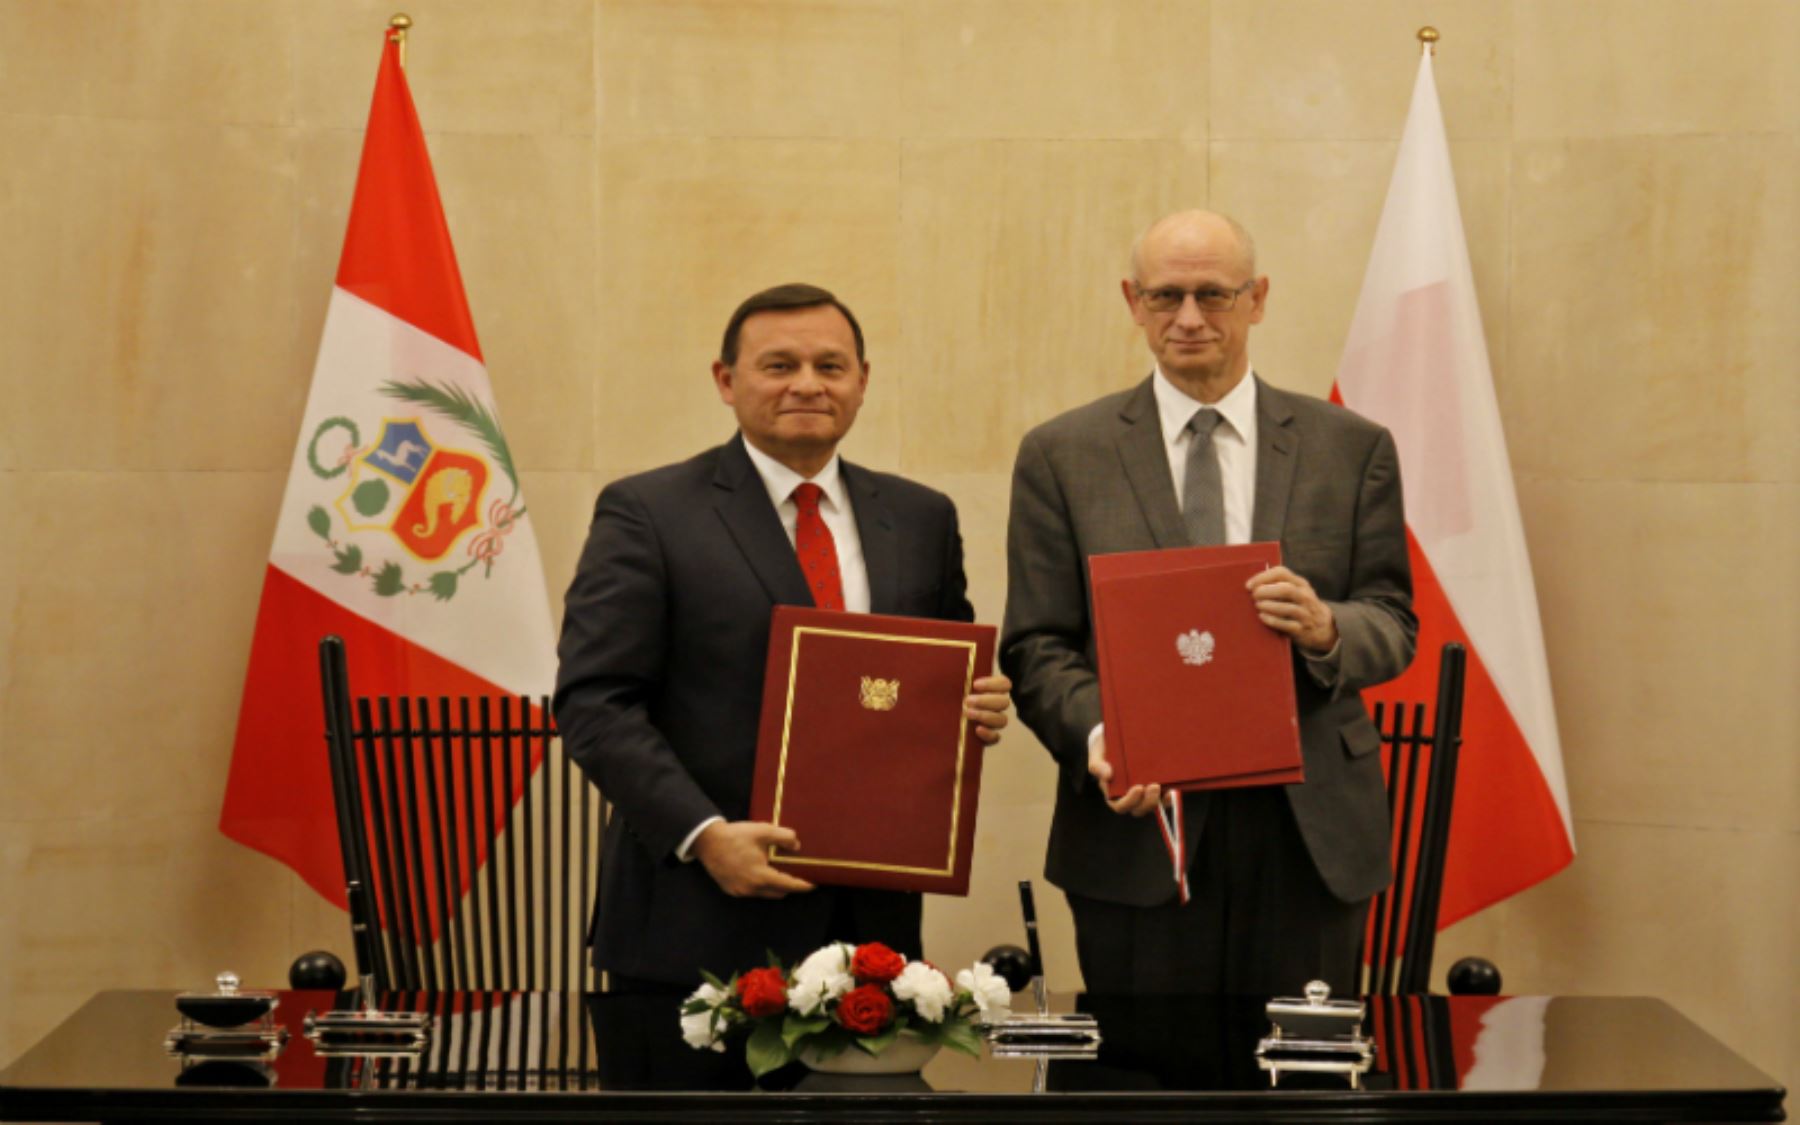 Peru, Poland Deputy Ministers meet in Warsaw